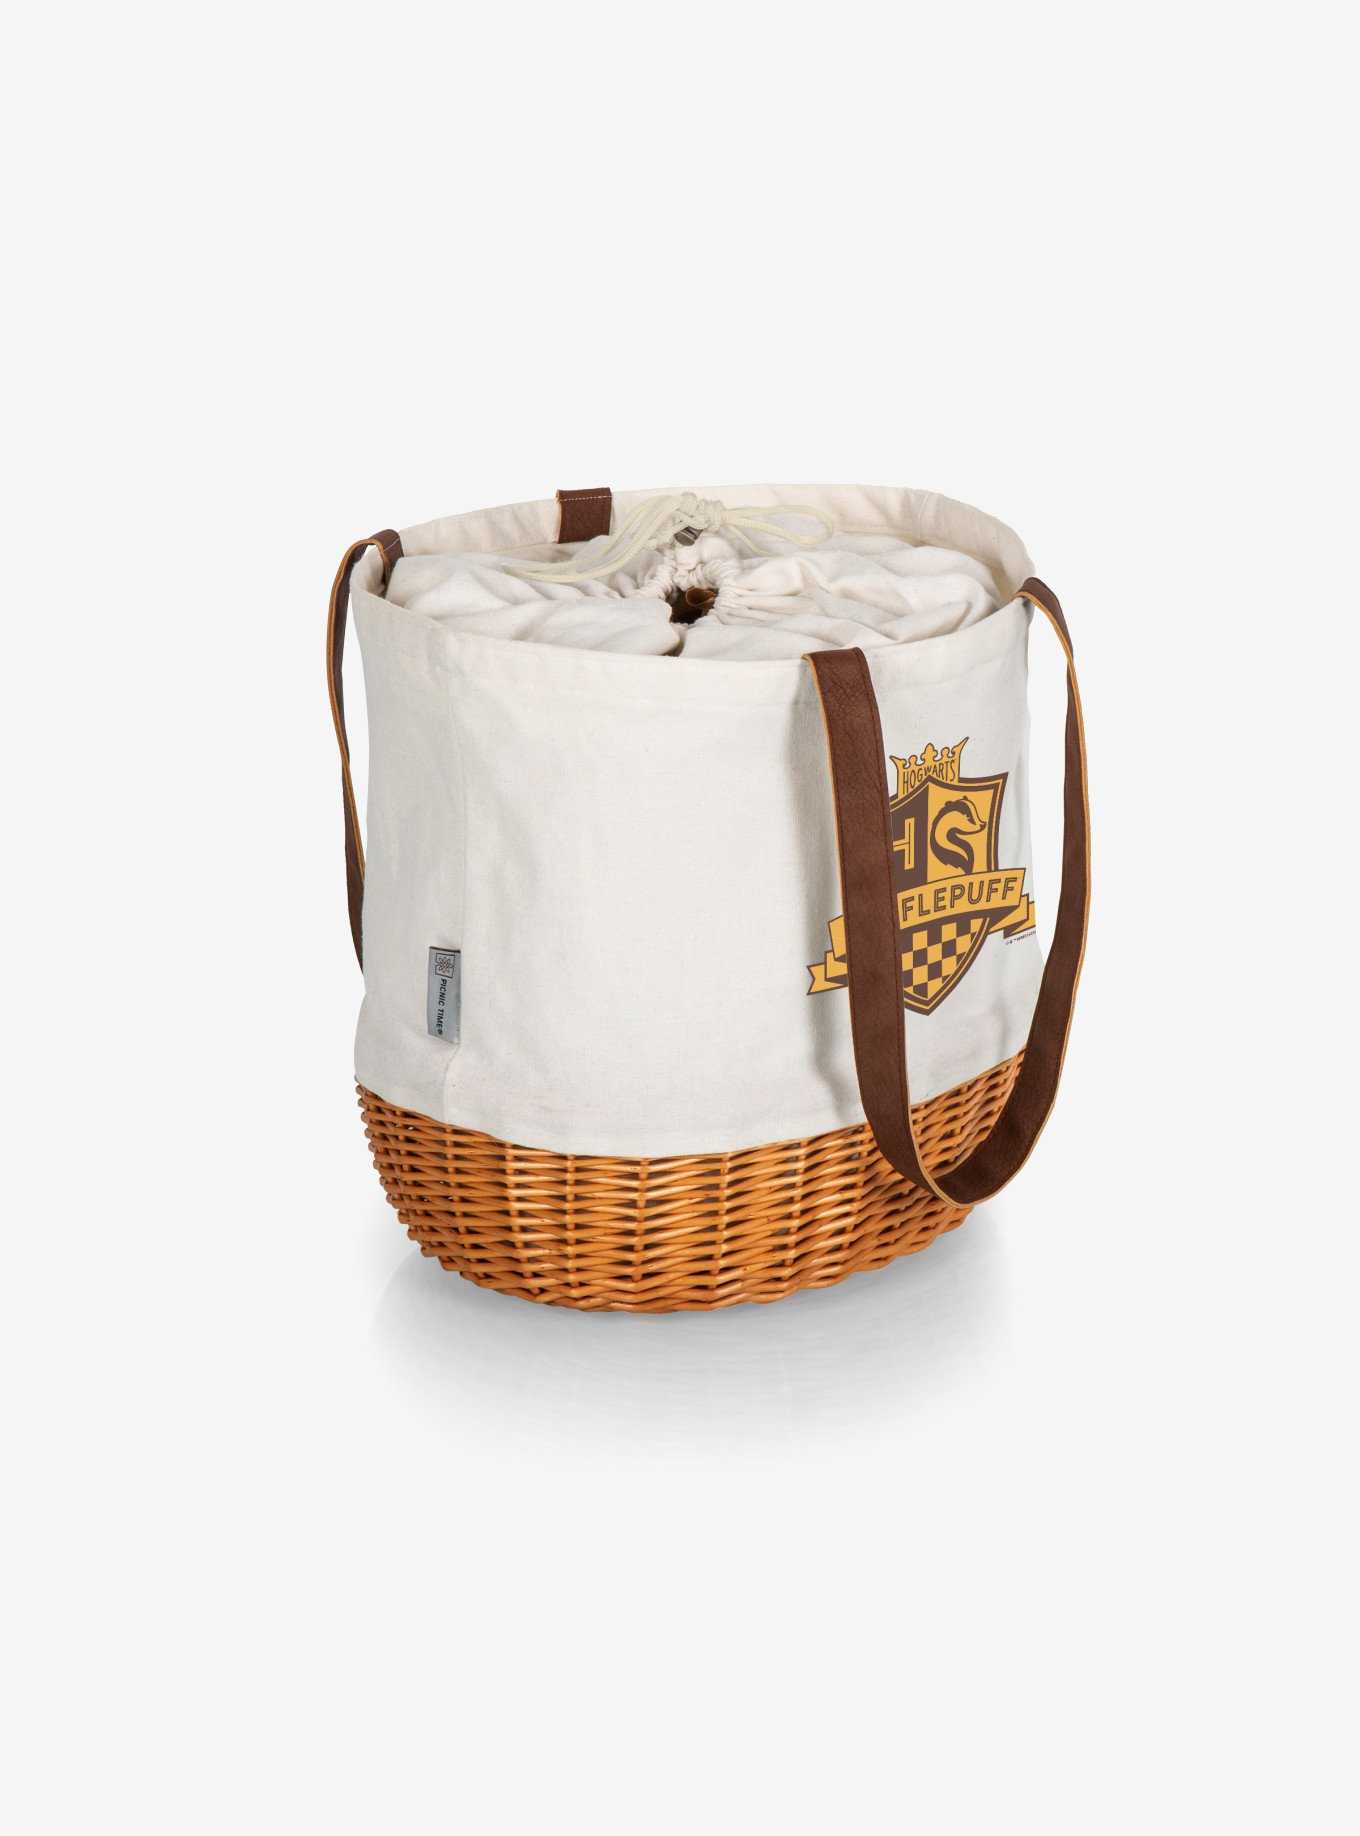 Harry Potter Hufflepuff Coronado Basket Tote Bag, , hi-res